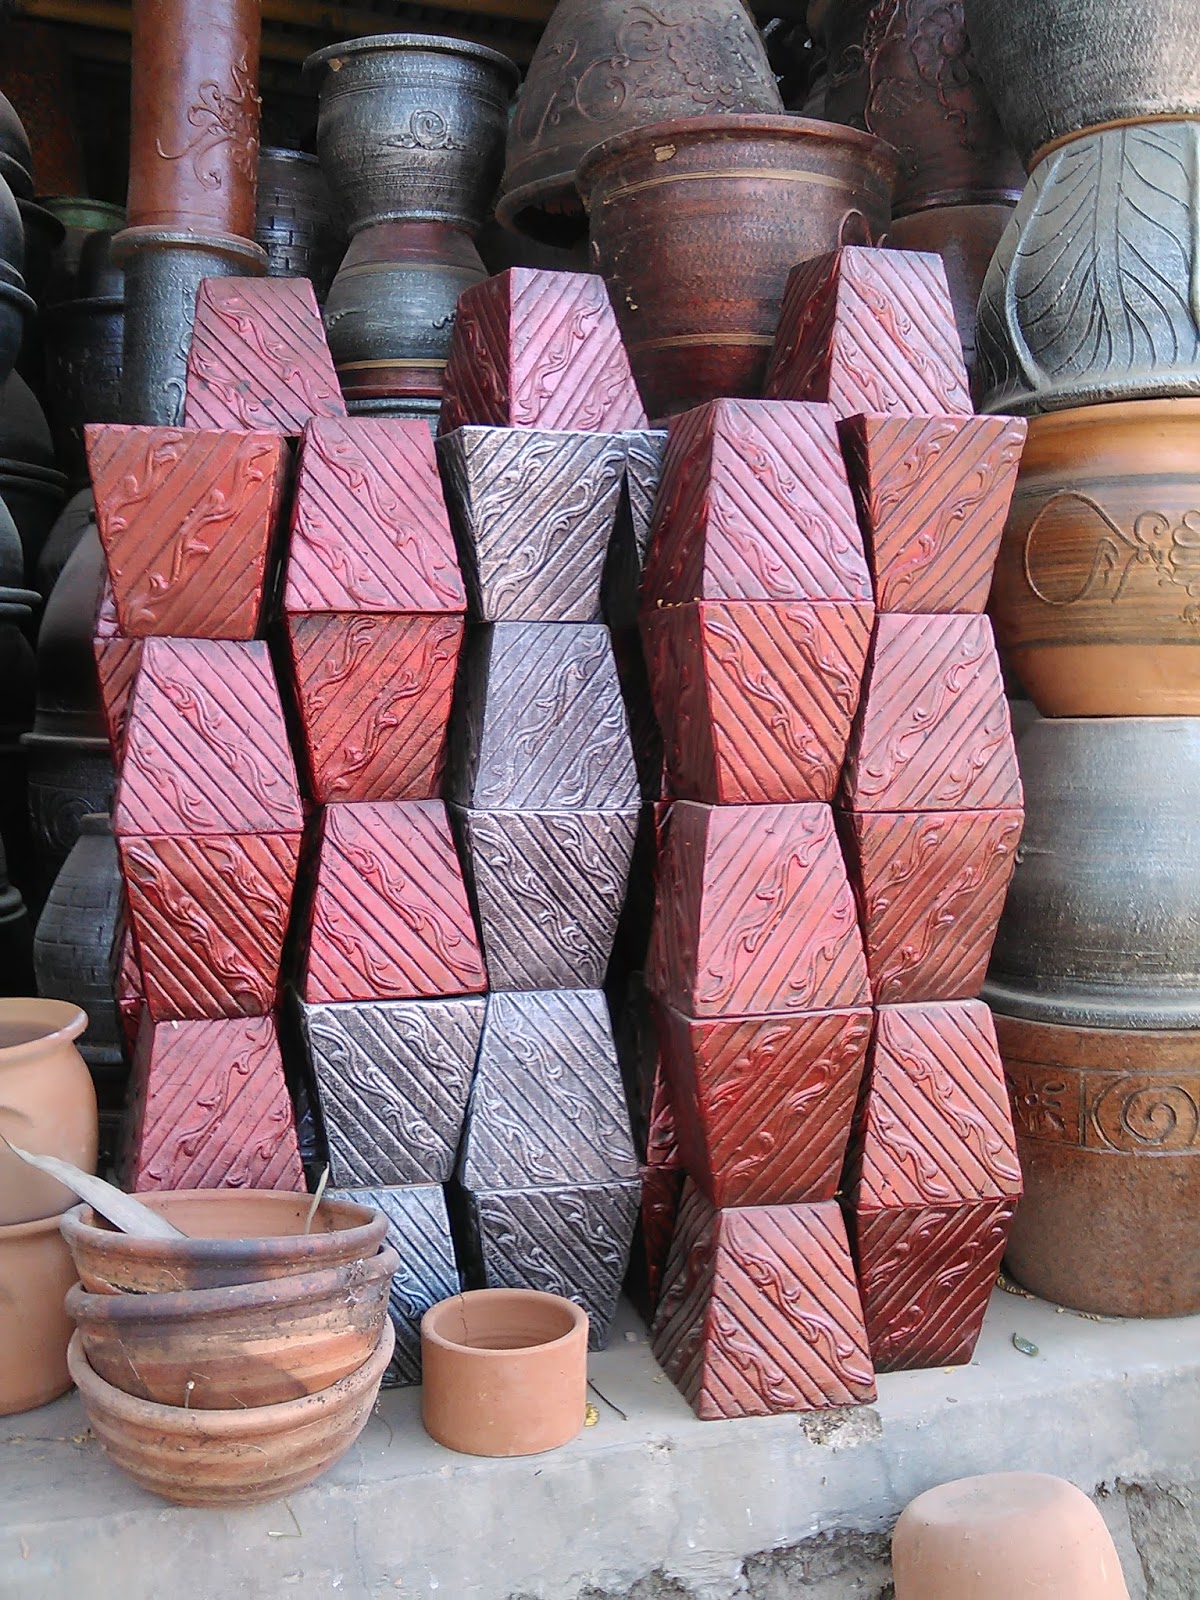  Jual  Pot  Bunga Kotak Antik Keramik  Mulya Plered